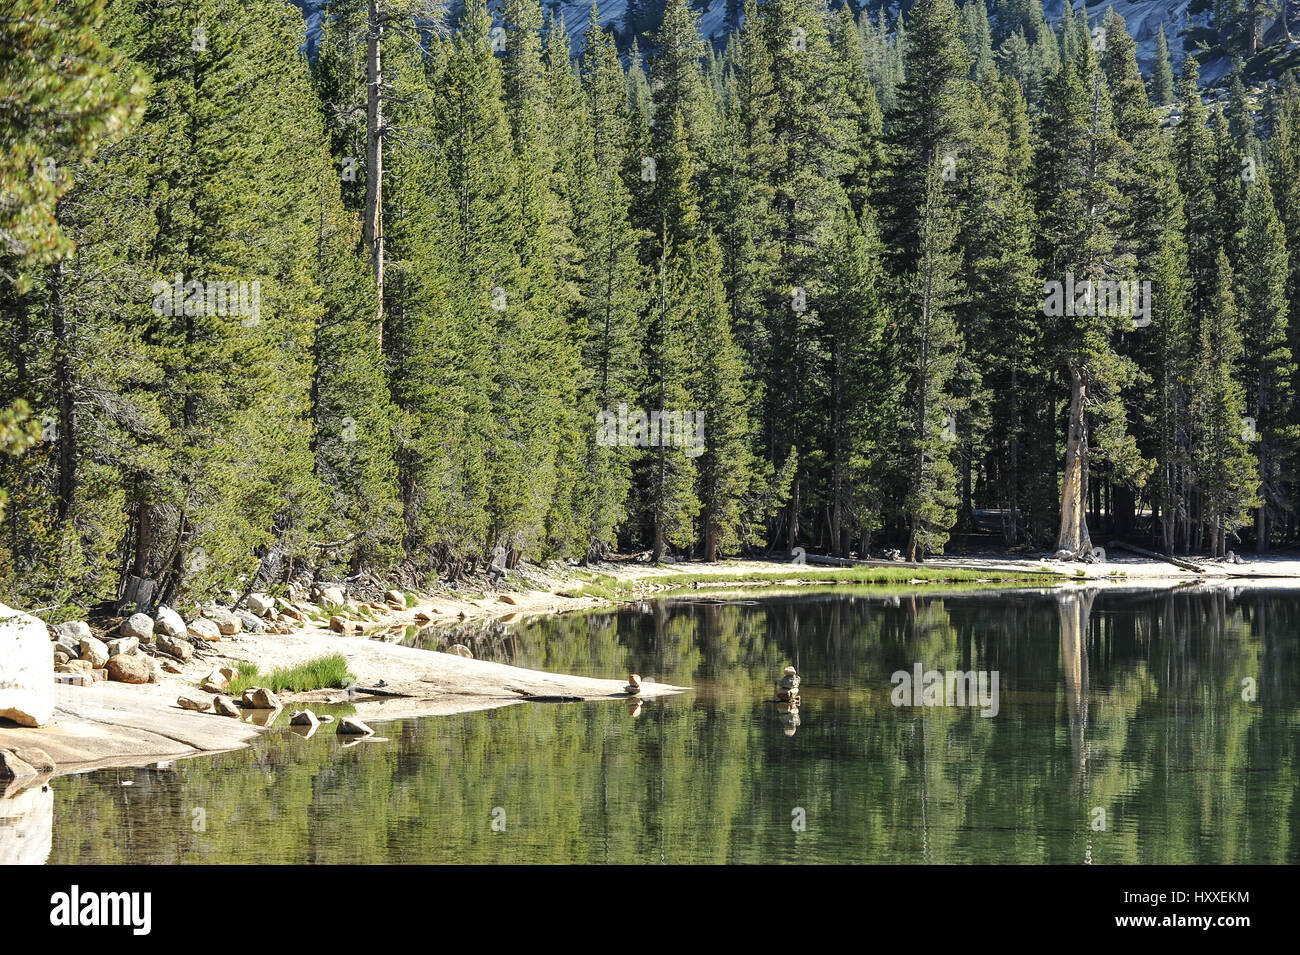 Yosemite park, California, United States Stock Photo